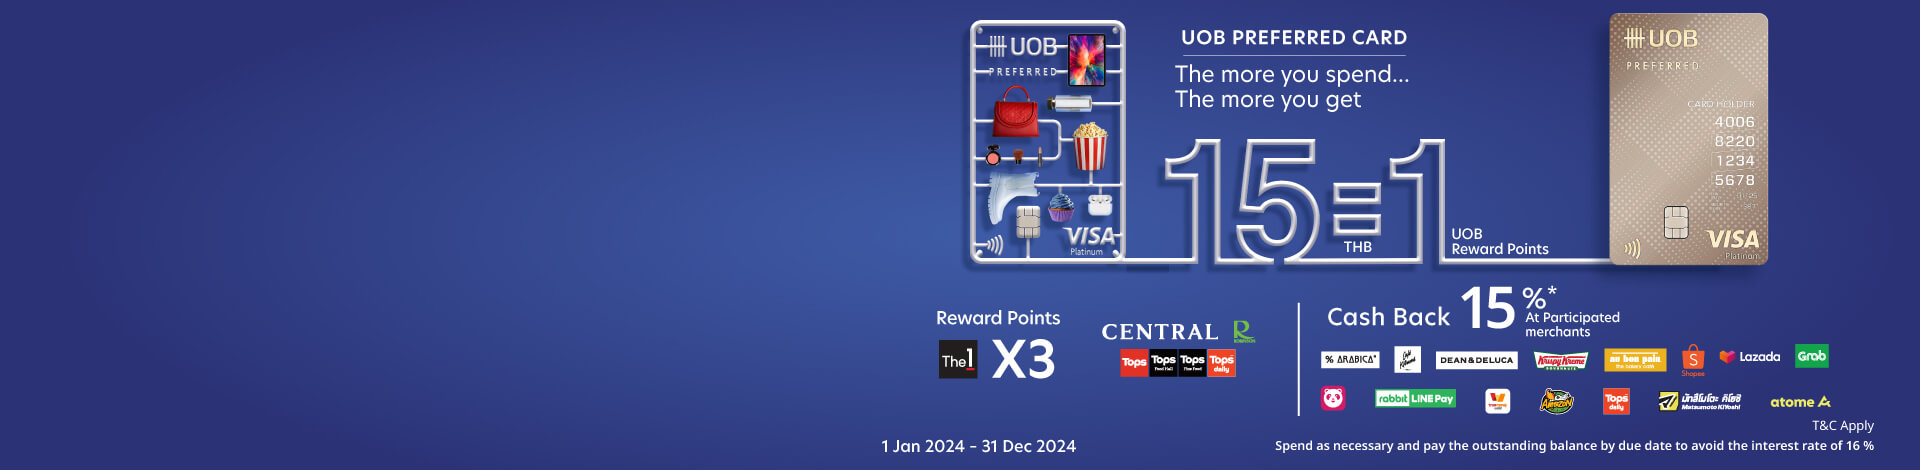 Banner showing UOB Preferred Credit Card 15 THB spend  = 1 Reward Point, 15% cashback at 15 merchants